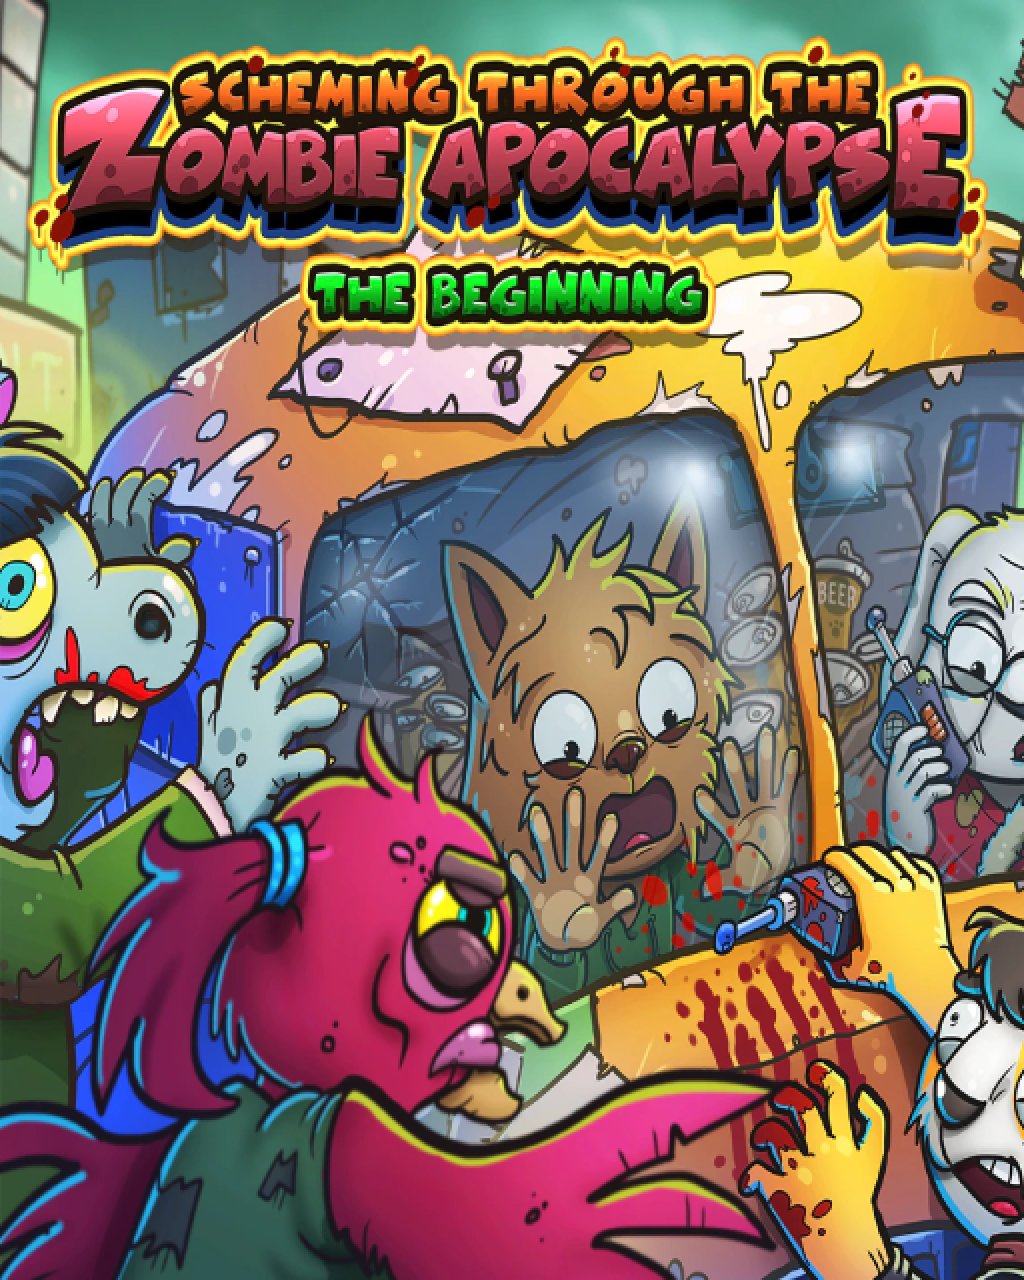 Scheming Through The Zombie Apocalypse The Beginning